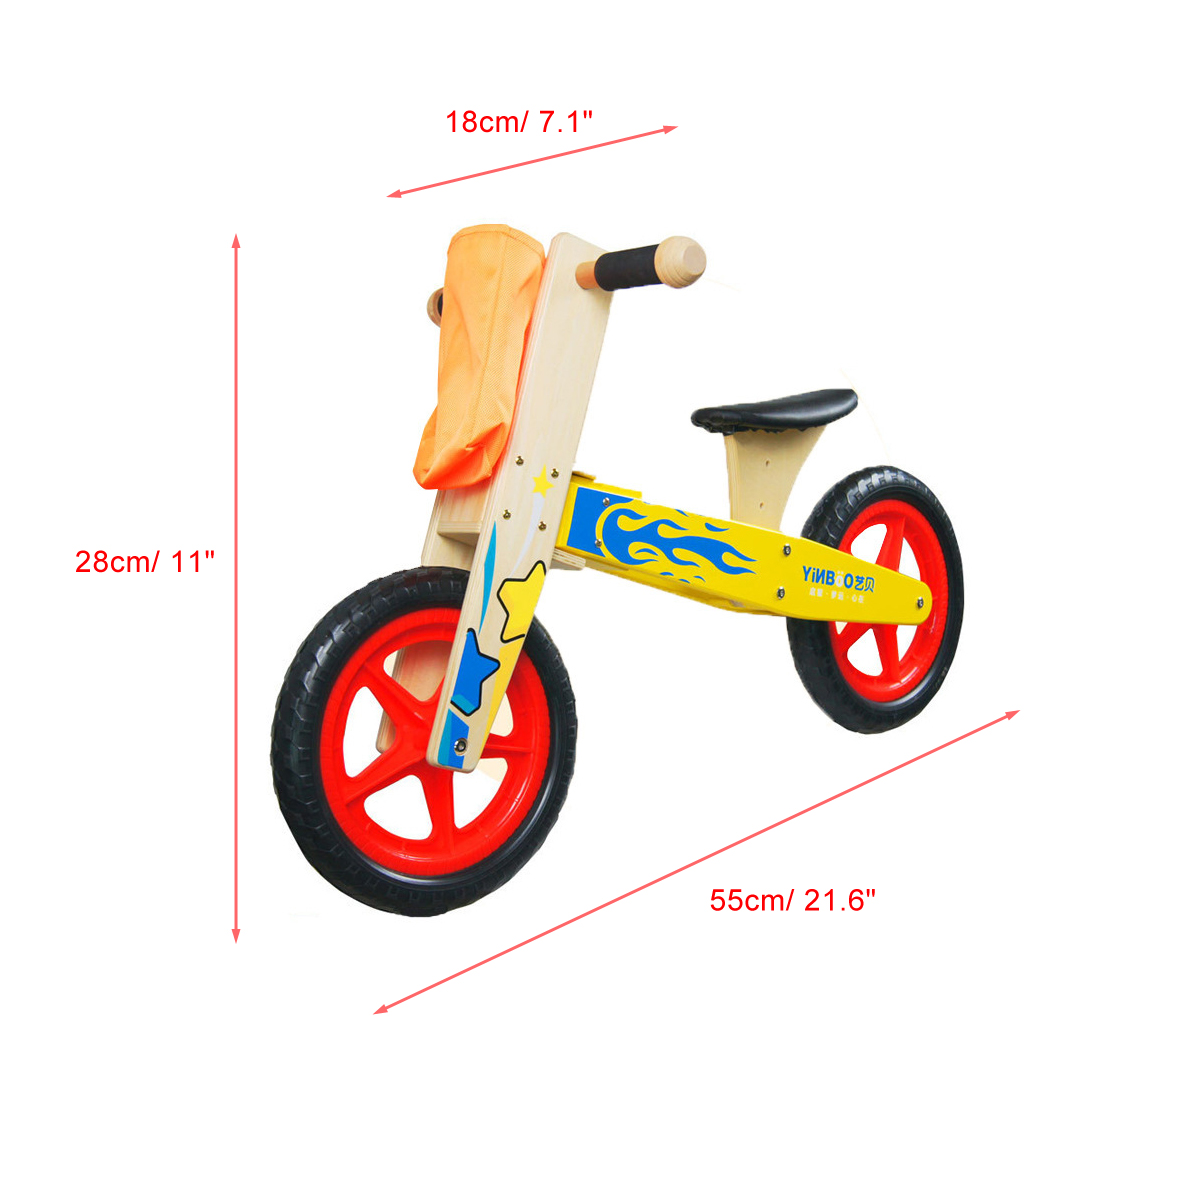 BIKIGHT-Mini-Wooden-Kids-Balance-Bike-No-Pedal-Ride-On-Toy-Push-Bicycle-Walking-Trainer-Outdoor-1331368